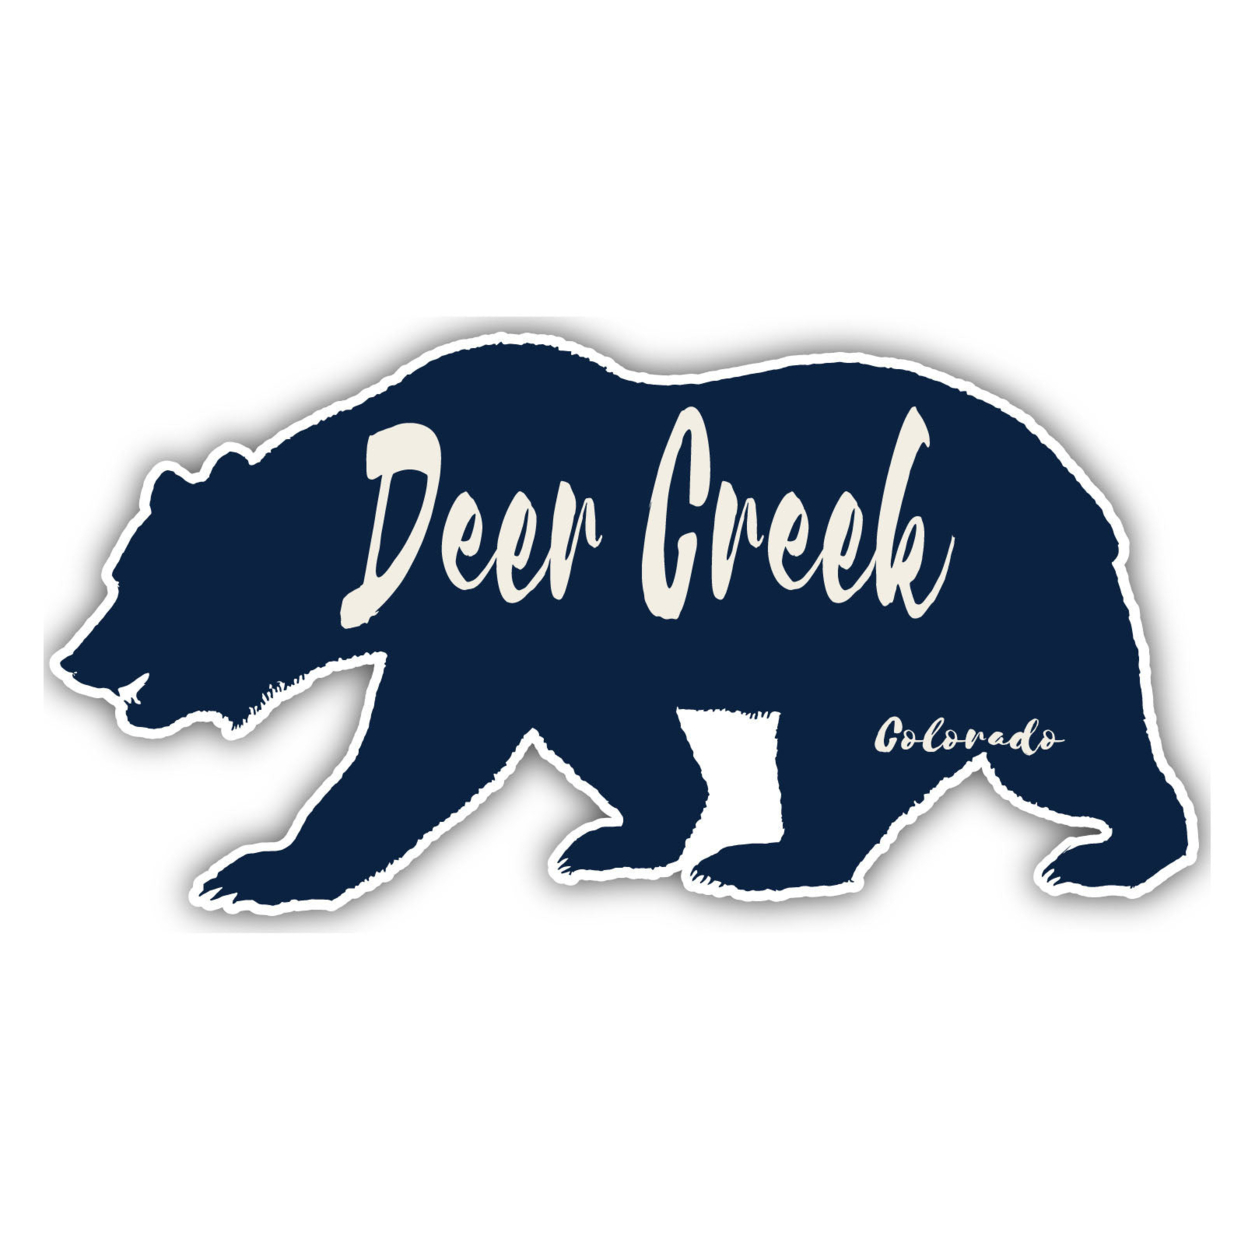 Deer Creek Colorado Souvenir Decorative Stickers (Choose Theme And Size) - Single Unit, 10-Inch, Great Outdoors